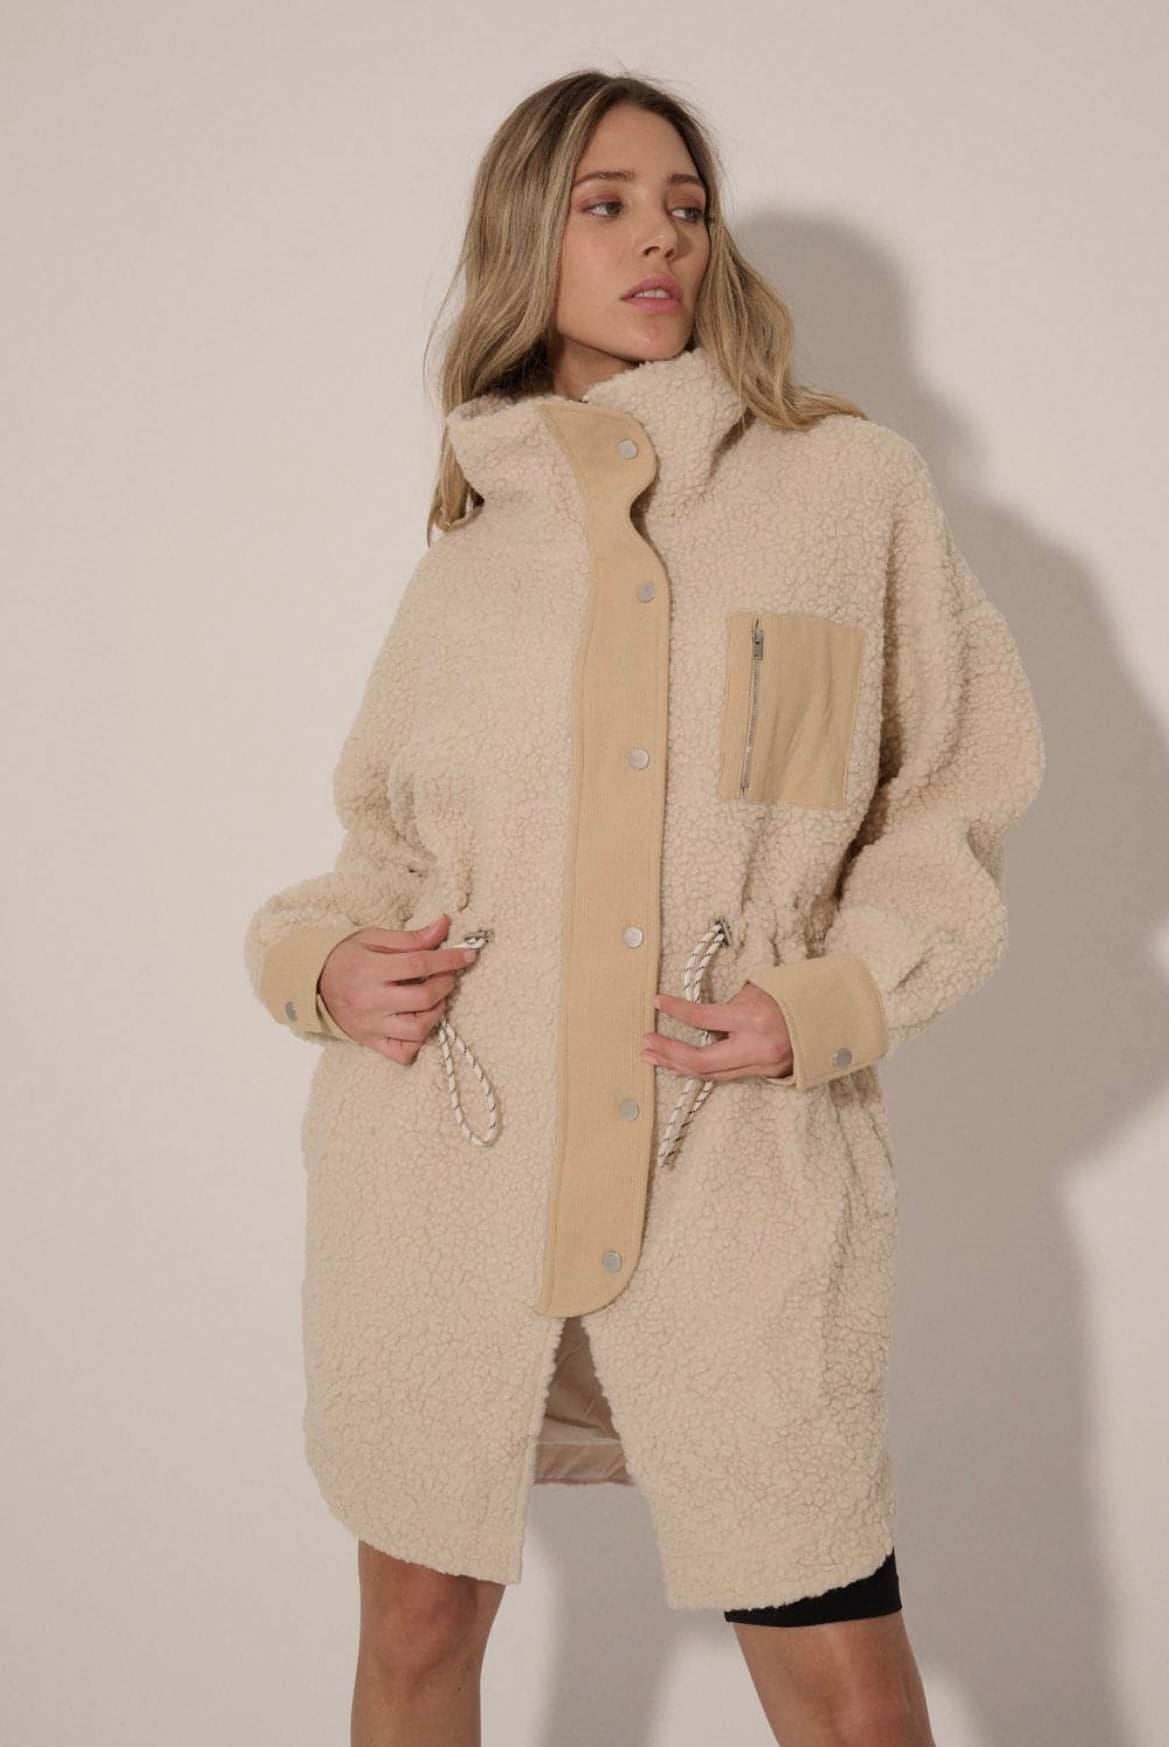 Rachel Faux Shearling Button Up Corduroy Contrast Jacket